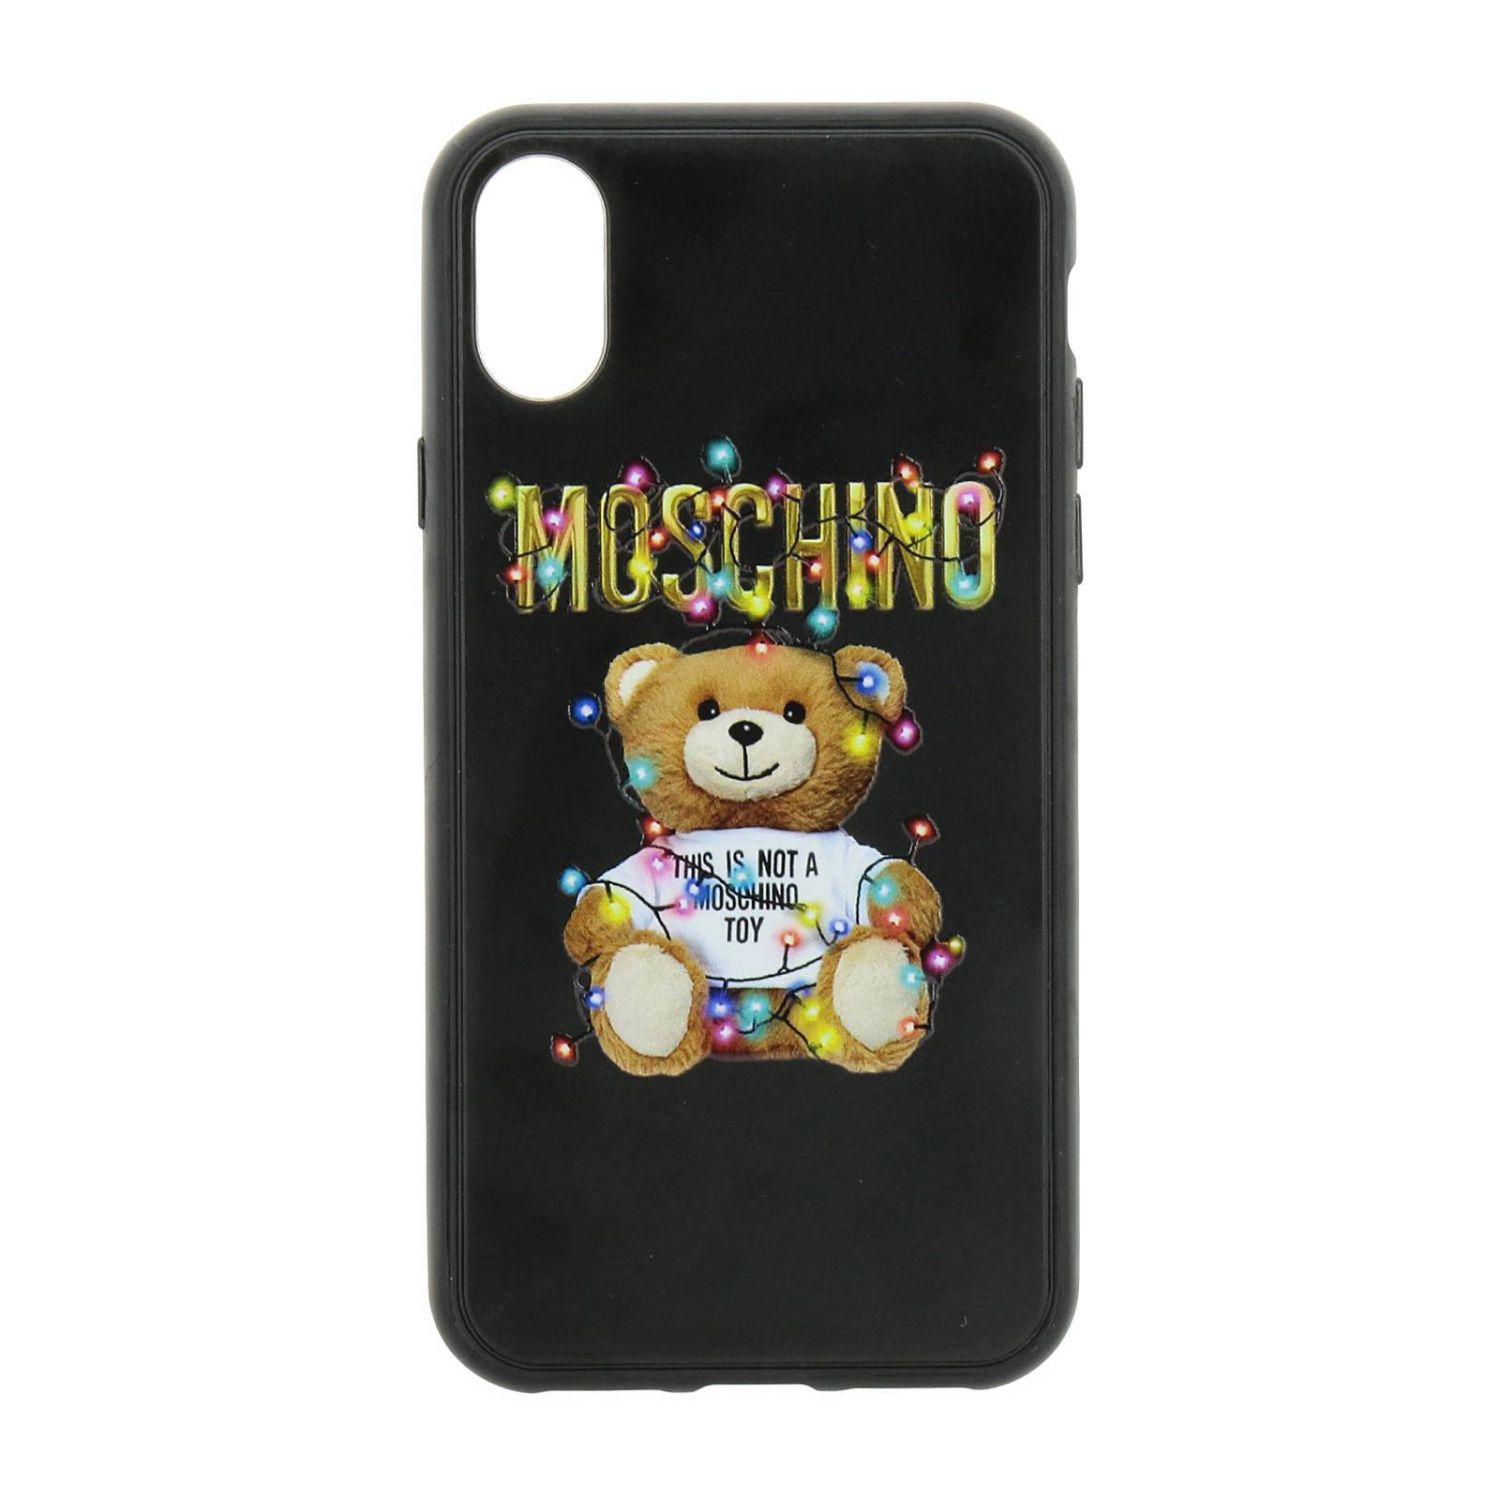 moschino phone case iphone x